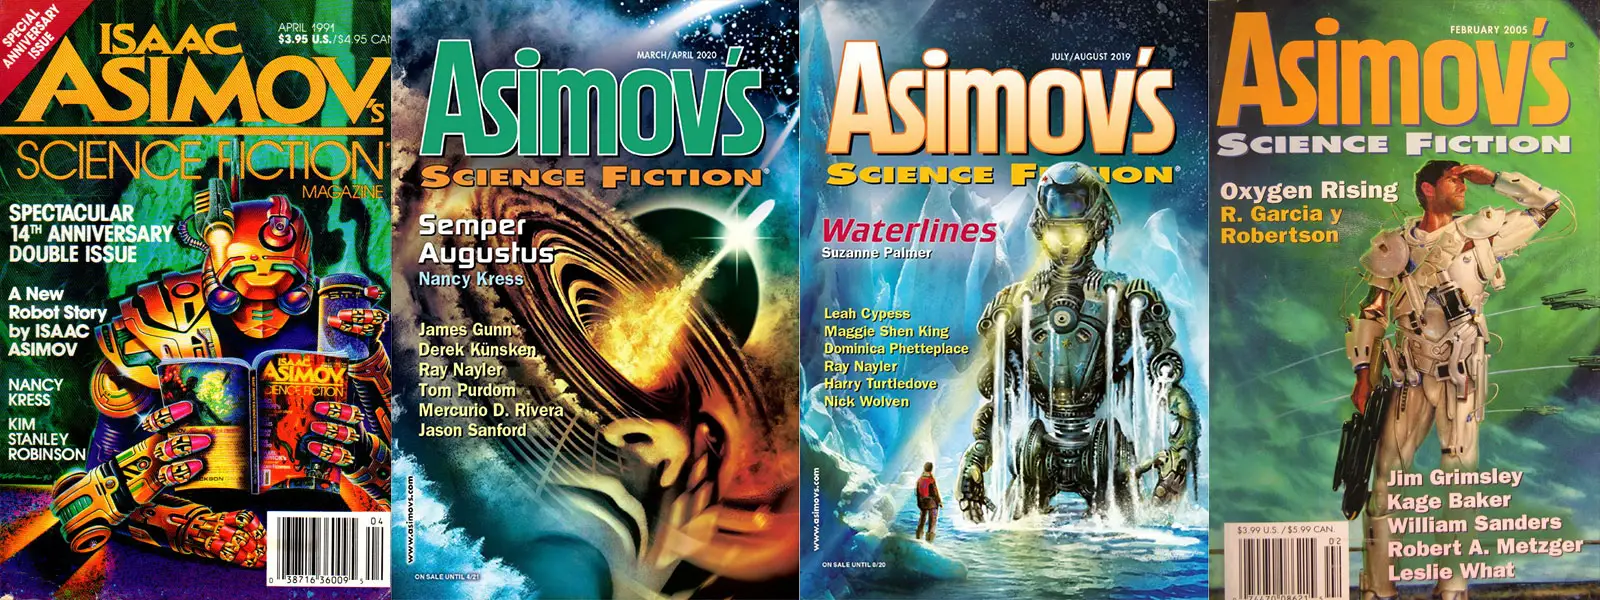 asimov's science fiction magazine banner